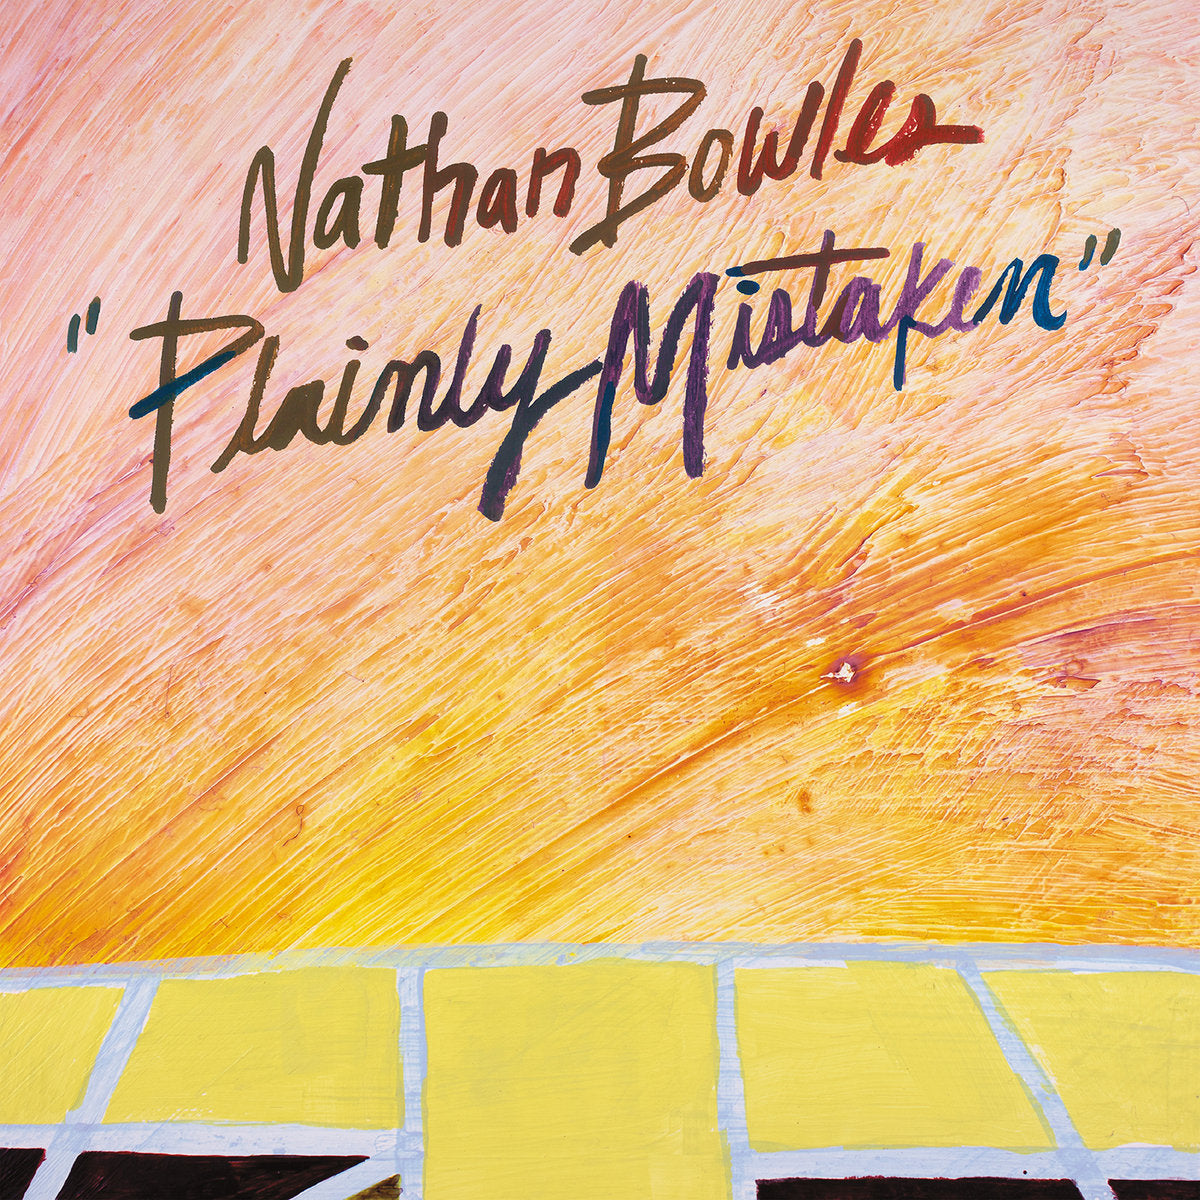 Nathan Bowles - Plainly Mistaken LP